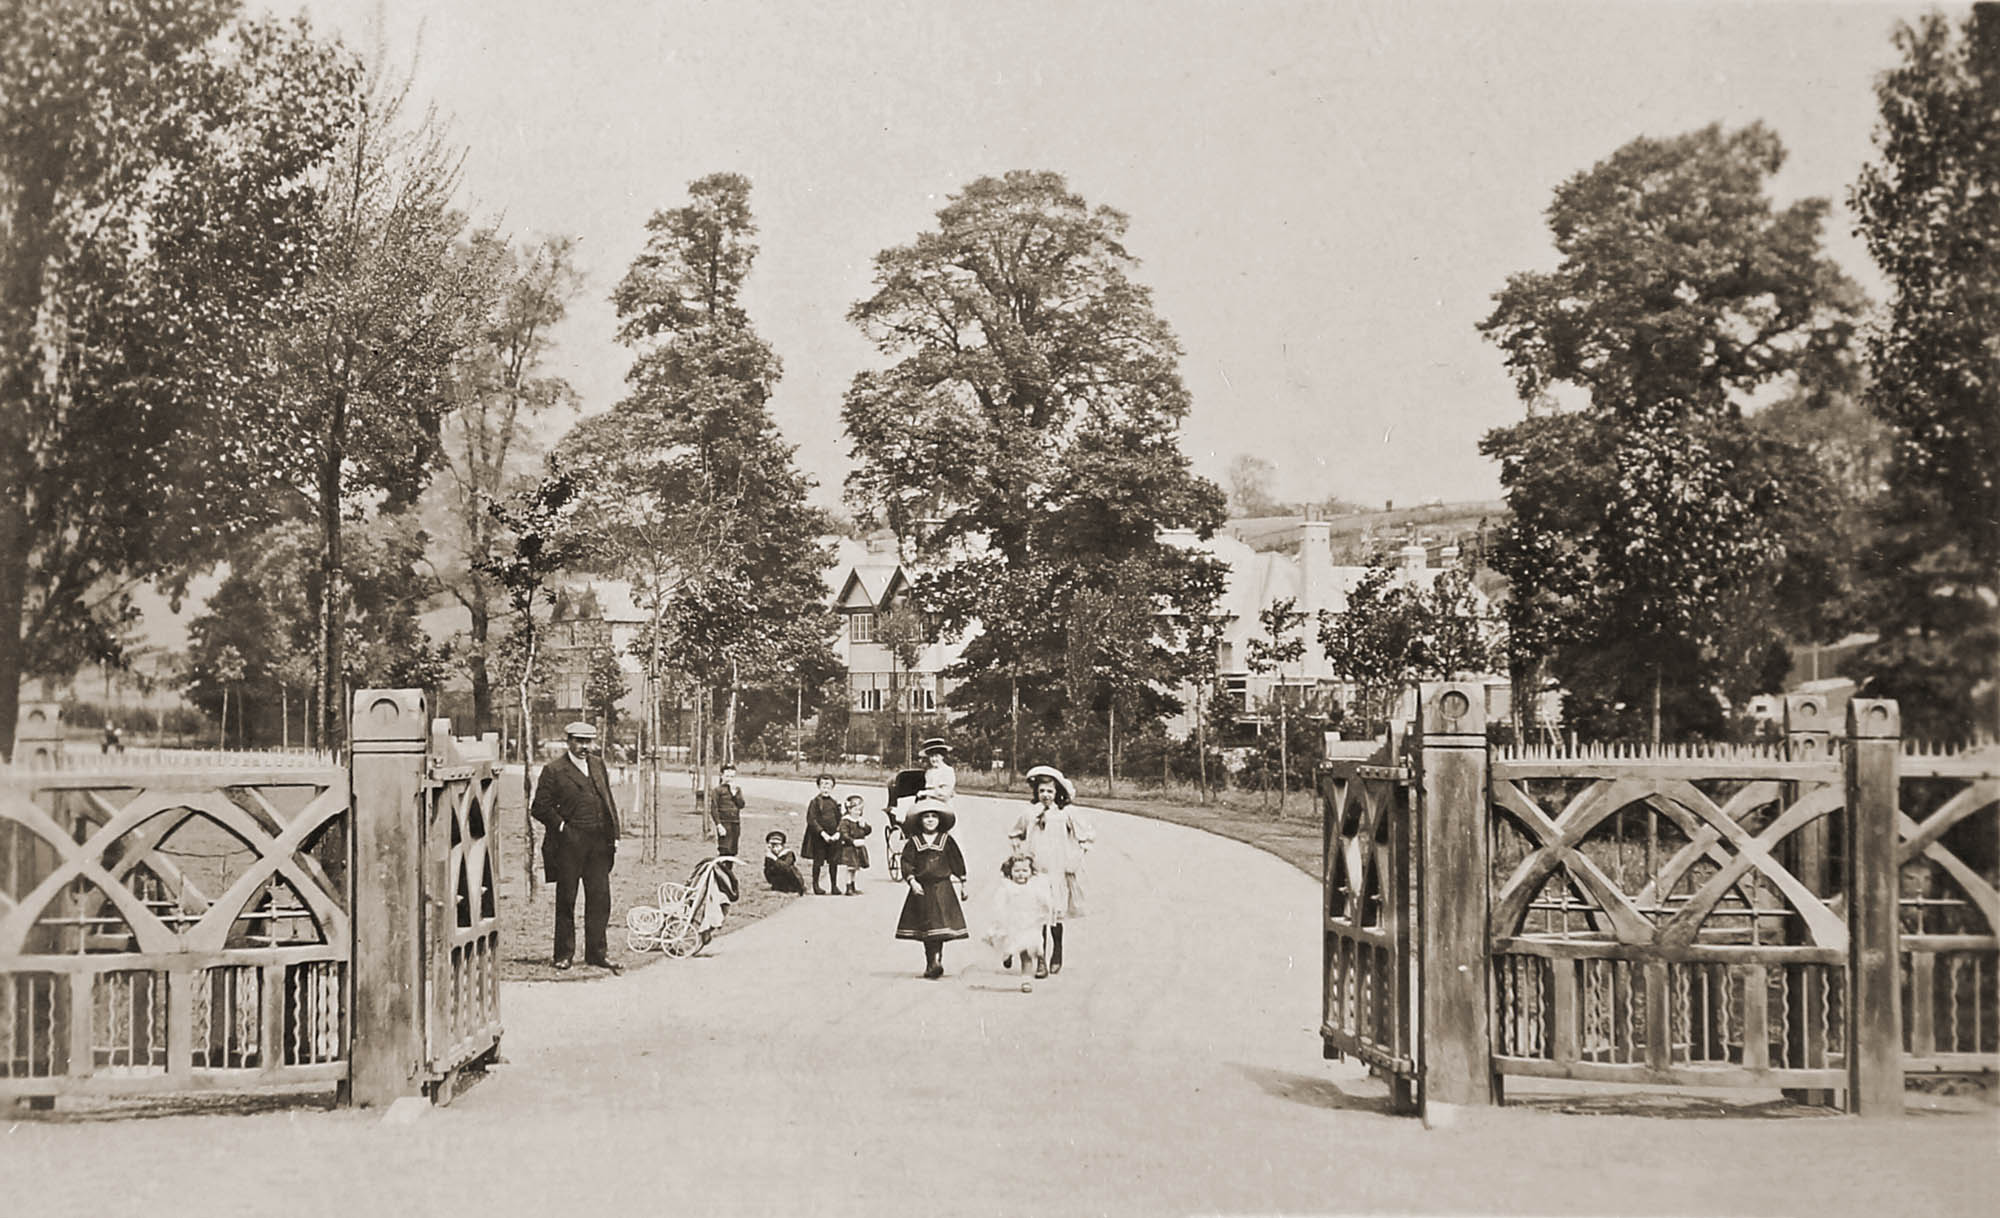 The main entrance to Western Park, circa 1900 - 